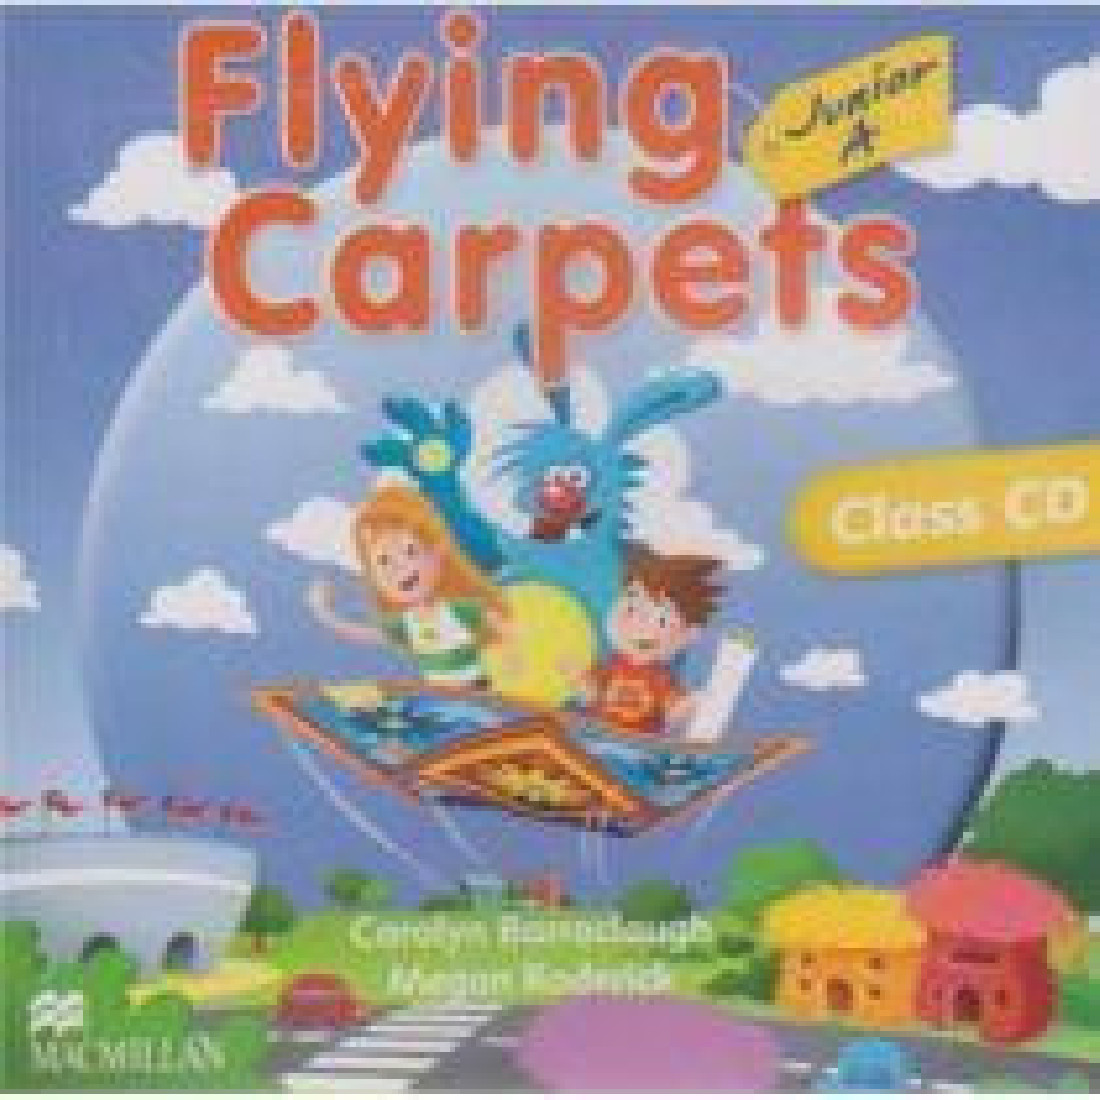 FLYING CARPETS A AUDIO CLASS CDS(2)